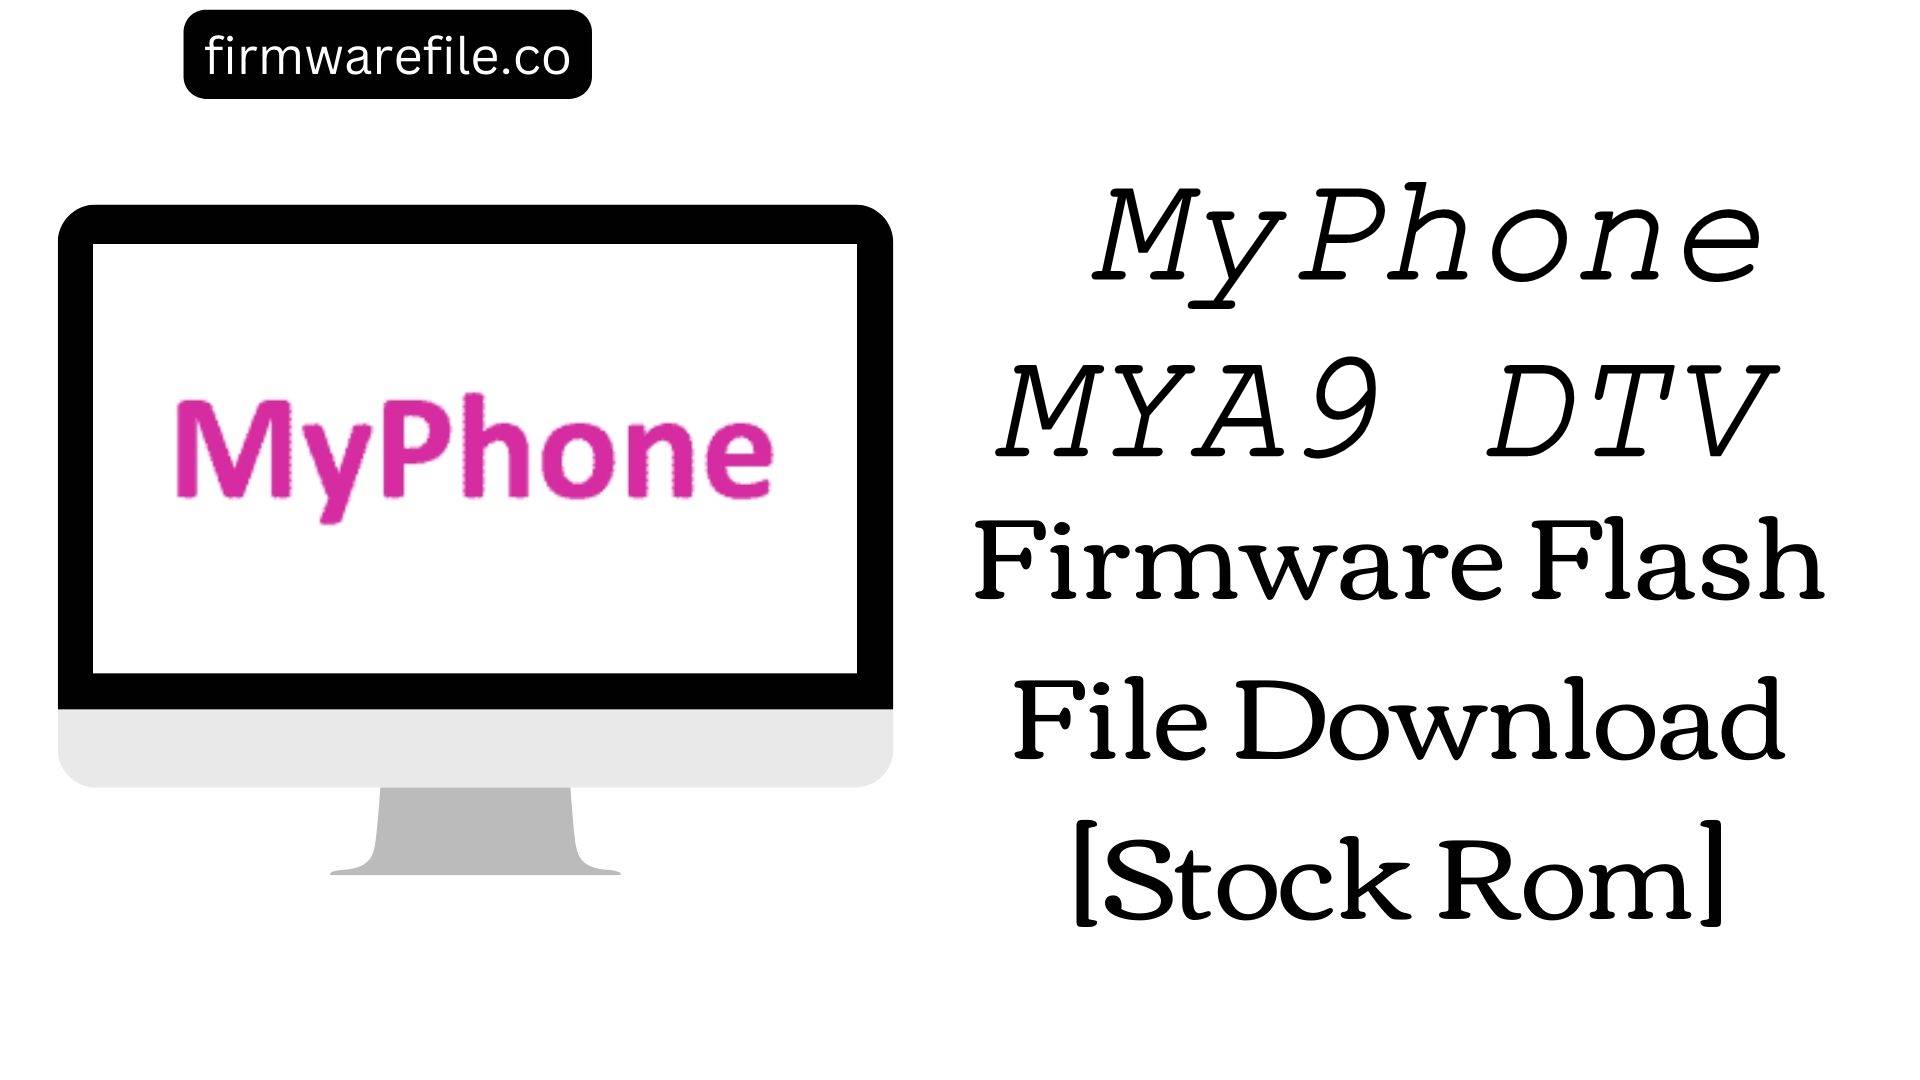 MyPhone MYA9 DTV